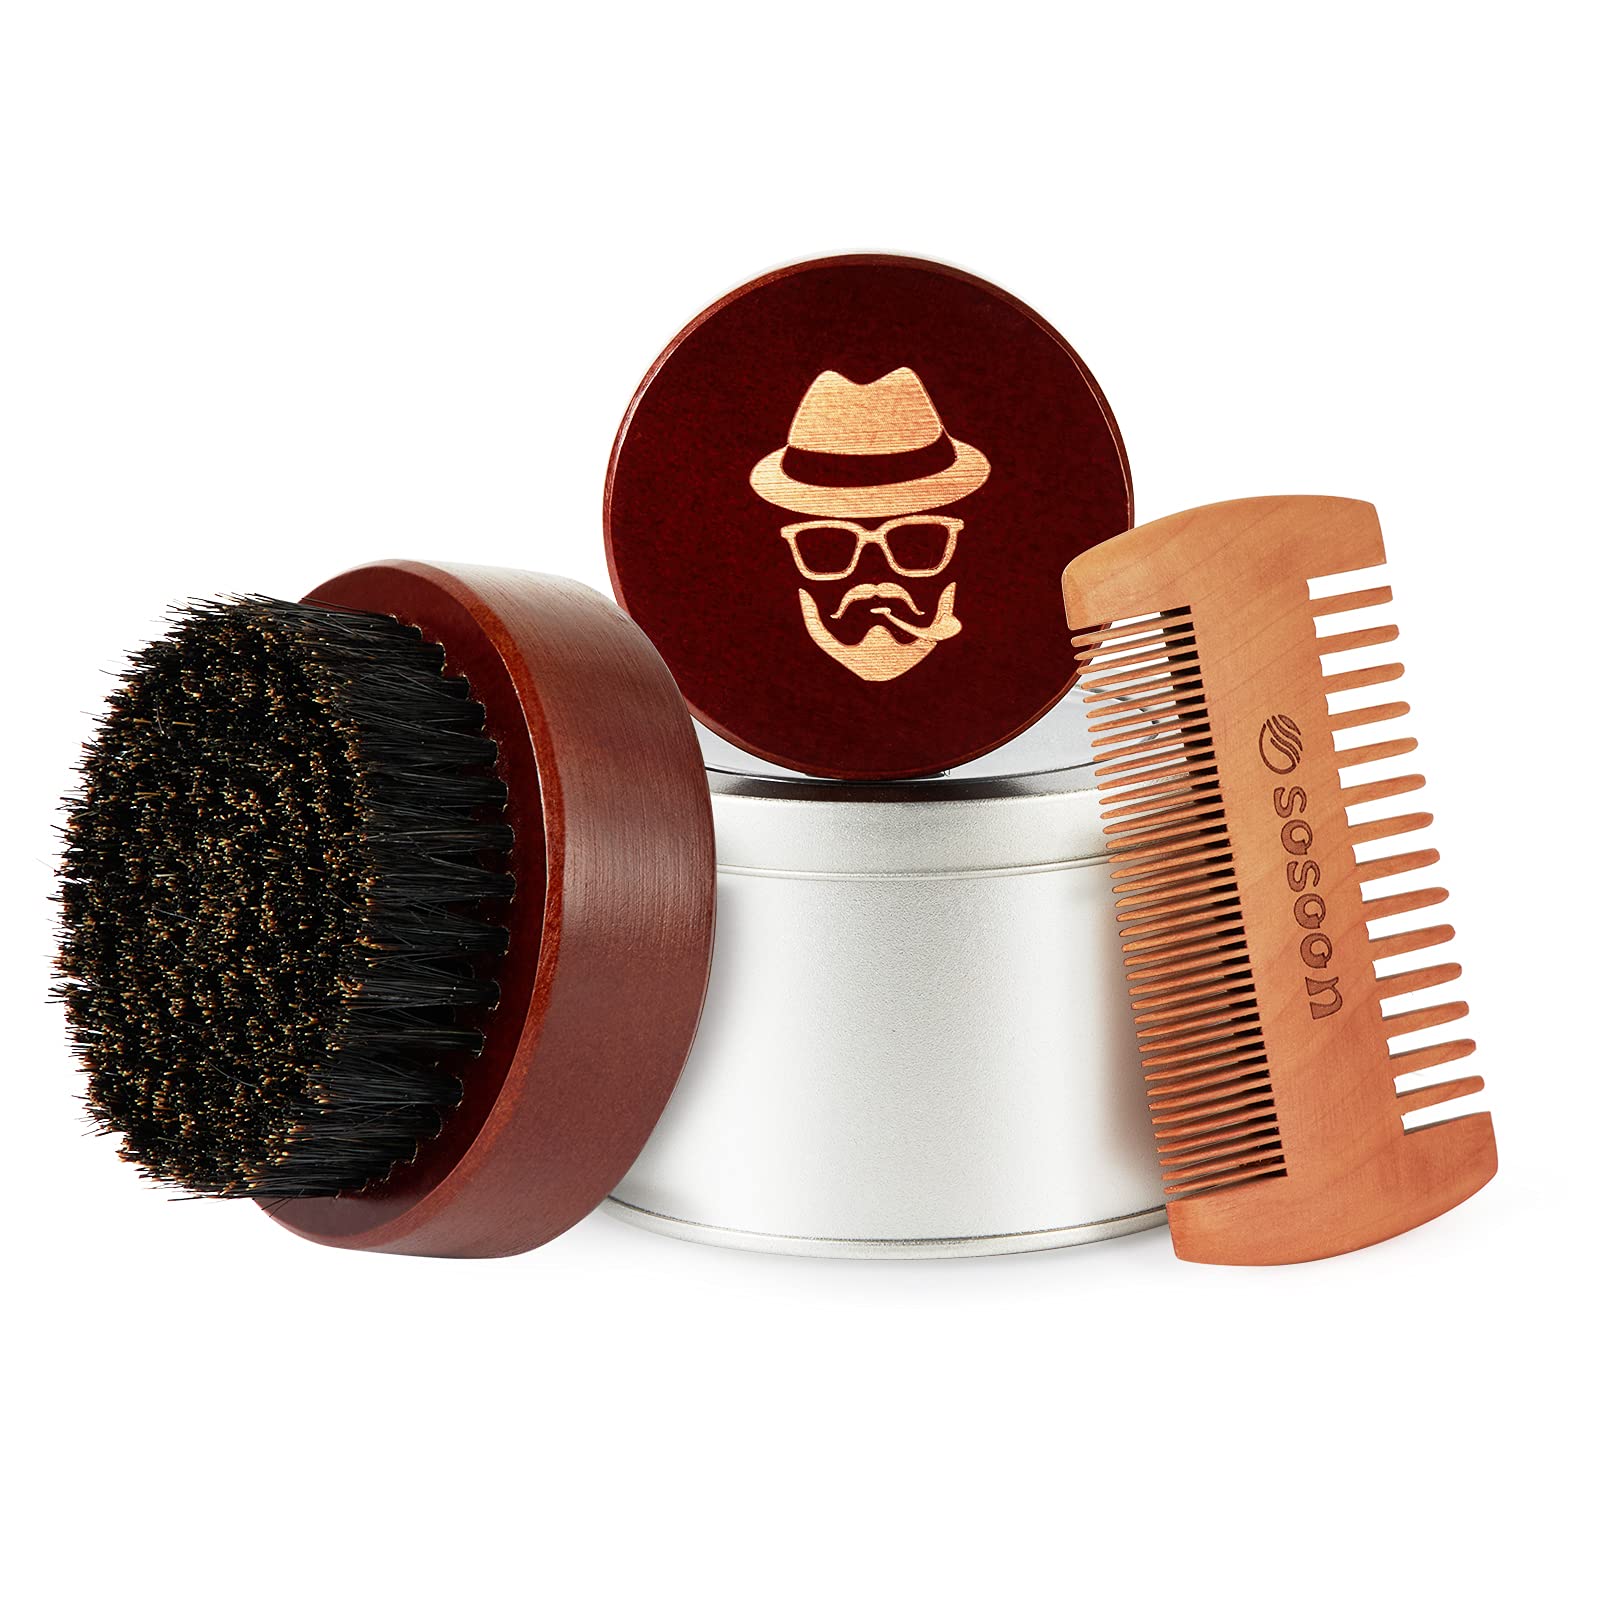 SoSoon Beard Brush, 100% Boar Bristle Black Walnut Wood Beard Comb Brush for Men To Tame and Soften Your Facial Hair